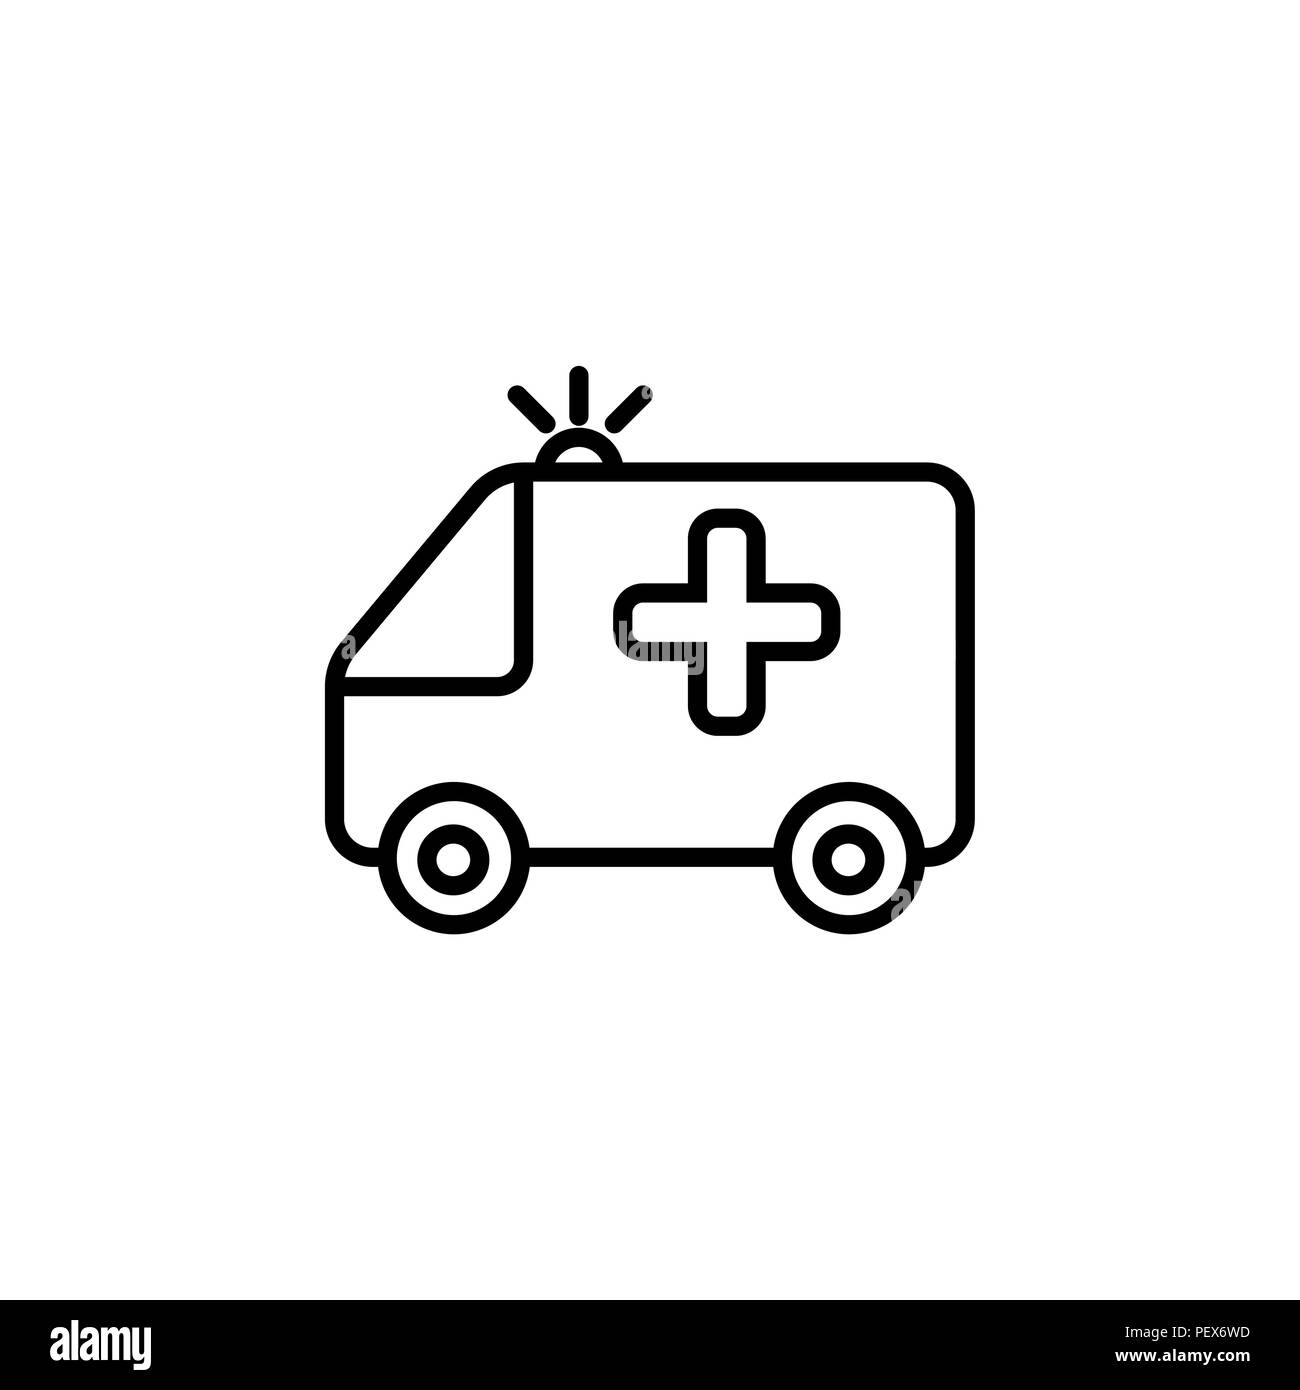 ambulance icon. vector illustration black on white background Stock Vector